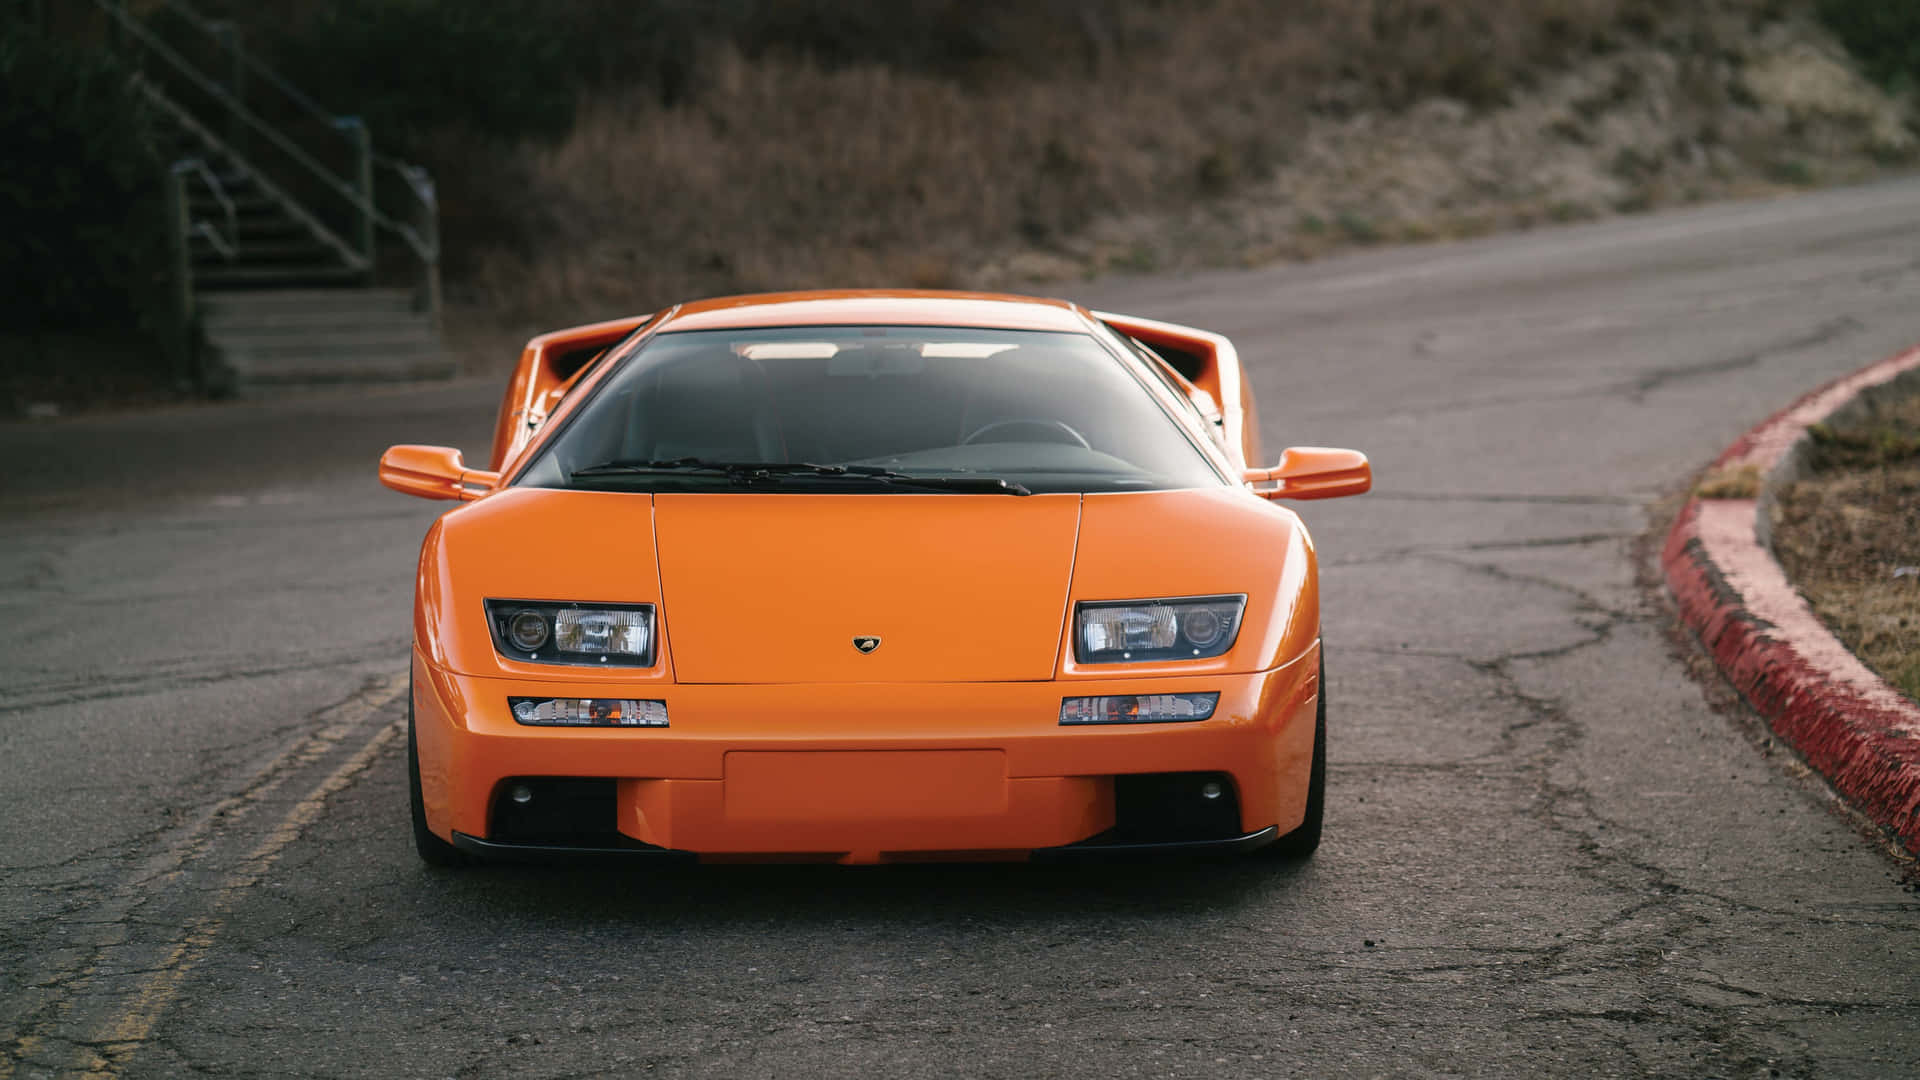 Stunning Lamborghini Diablo in Action Wallpaper